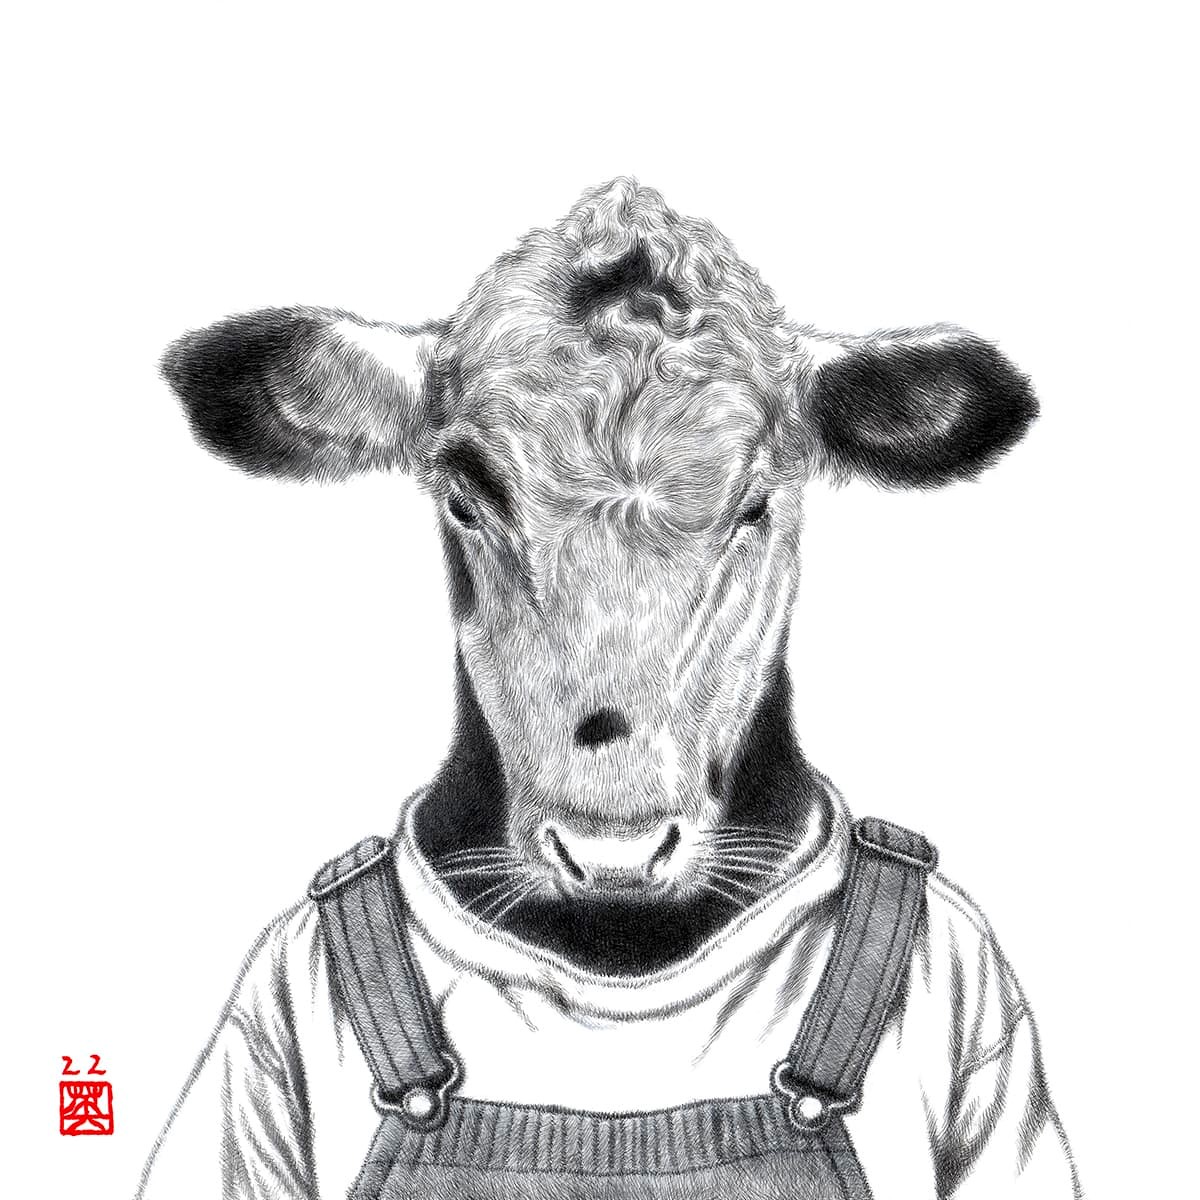 Hideyuki Sobue - Portrait #12 (Calf in Dungaree) - Japanese Sumi ink & acrylic on aluminium plate, 20x20cm £995